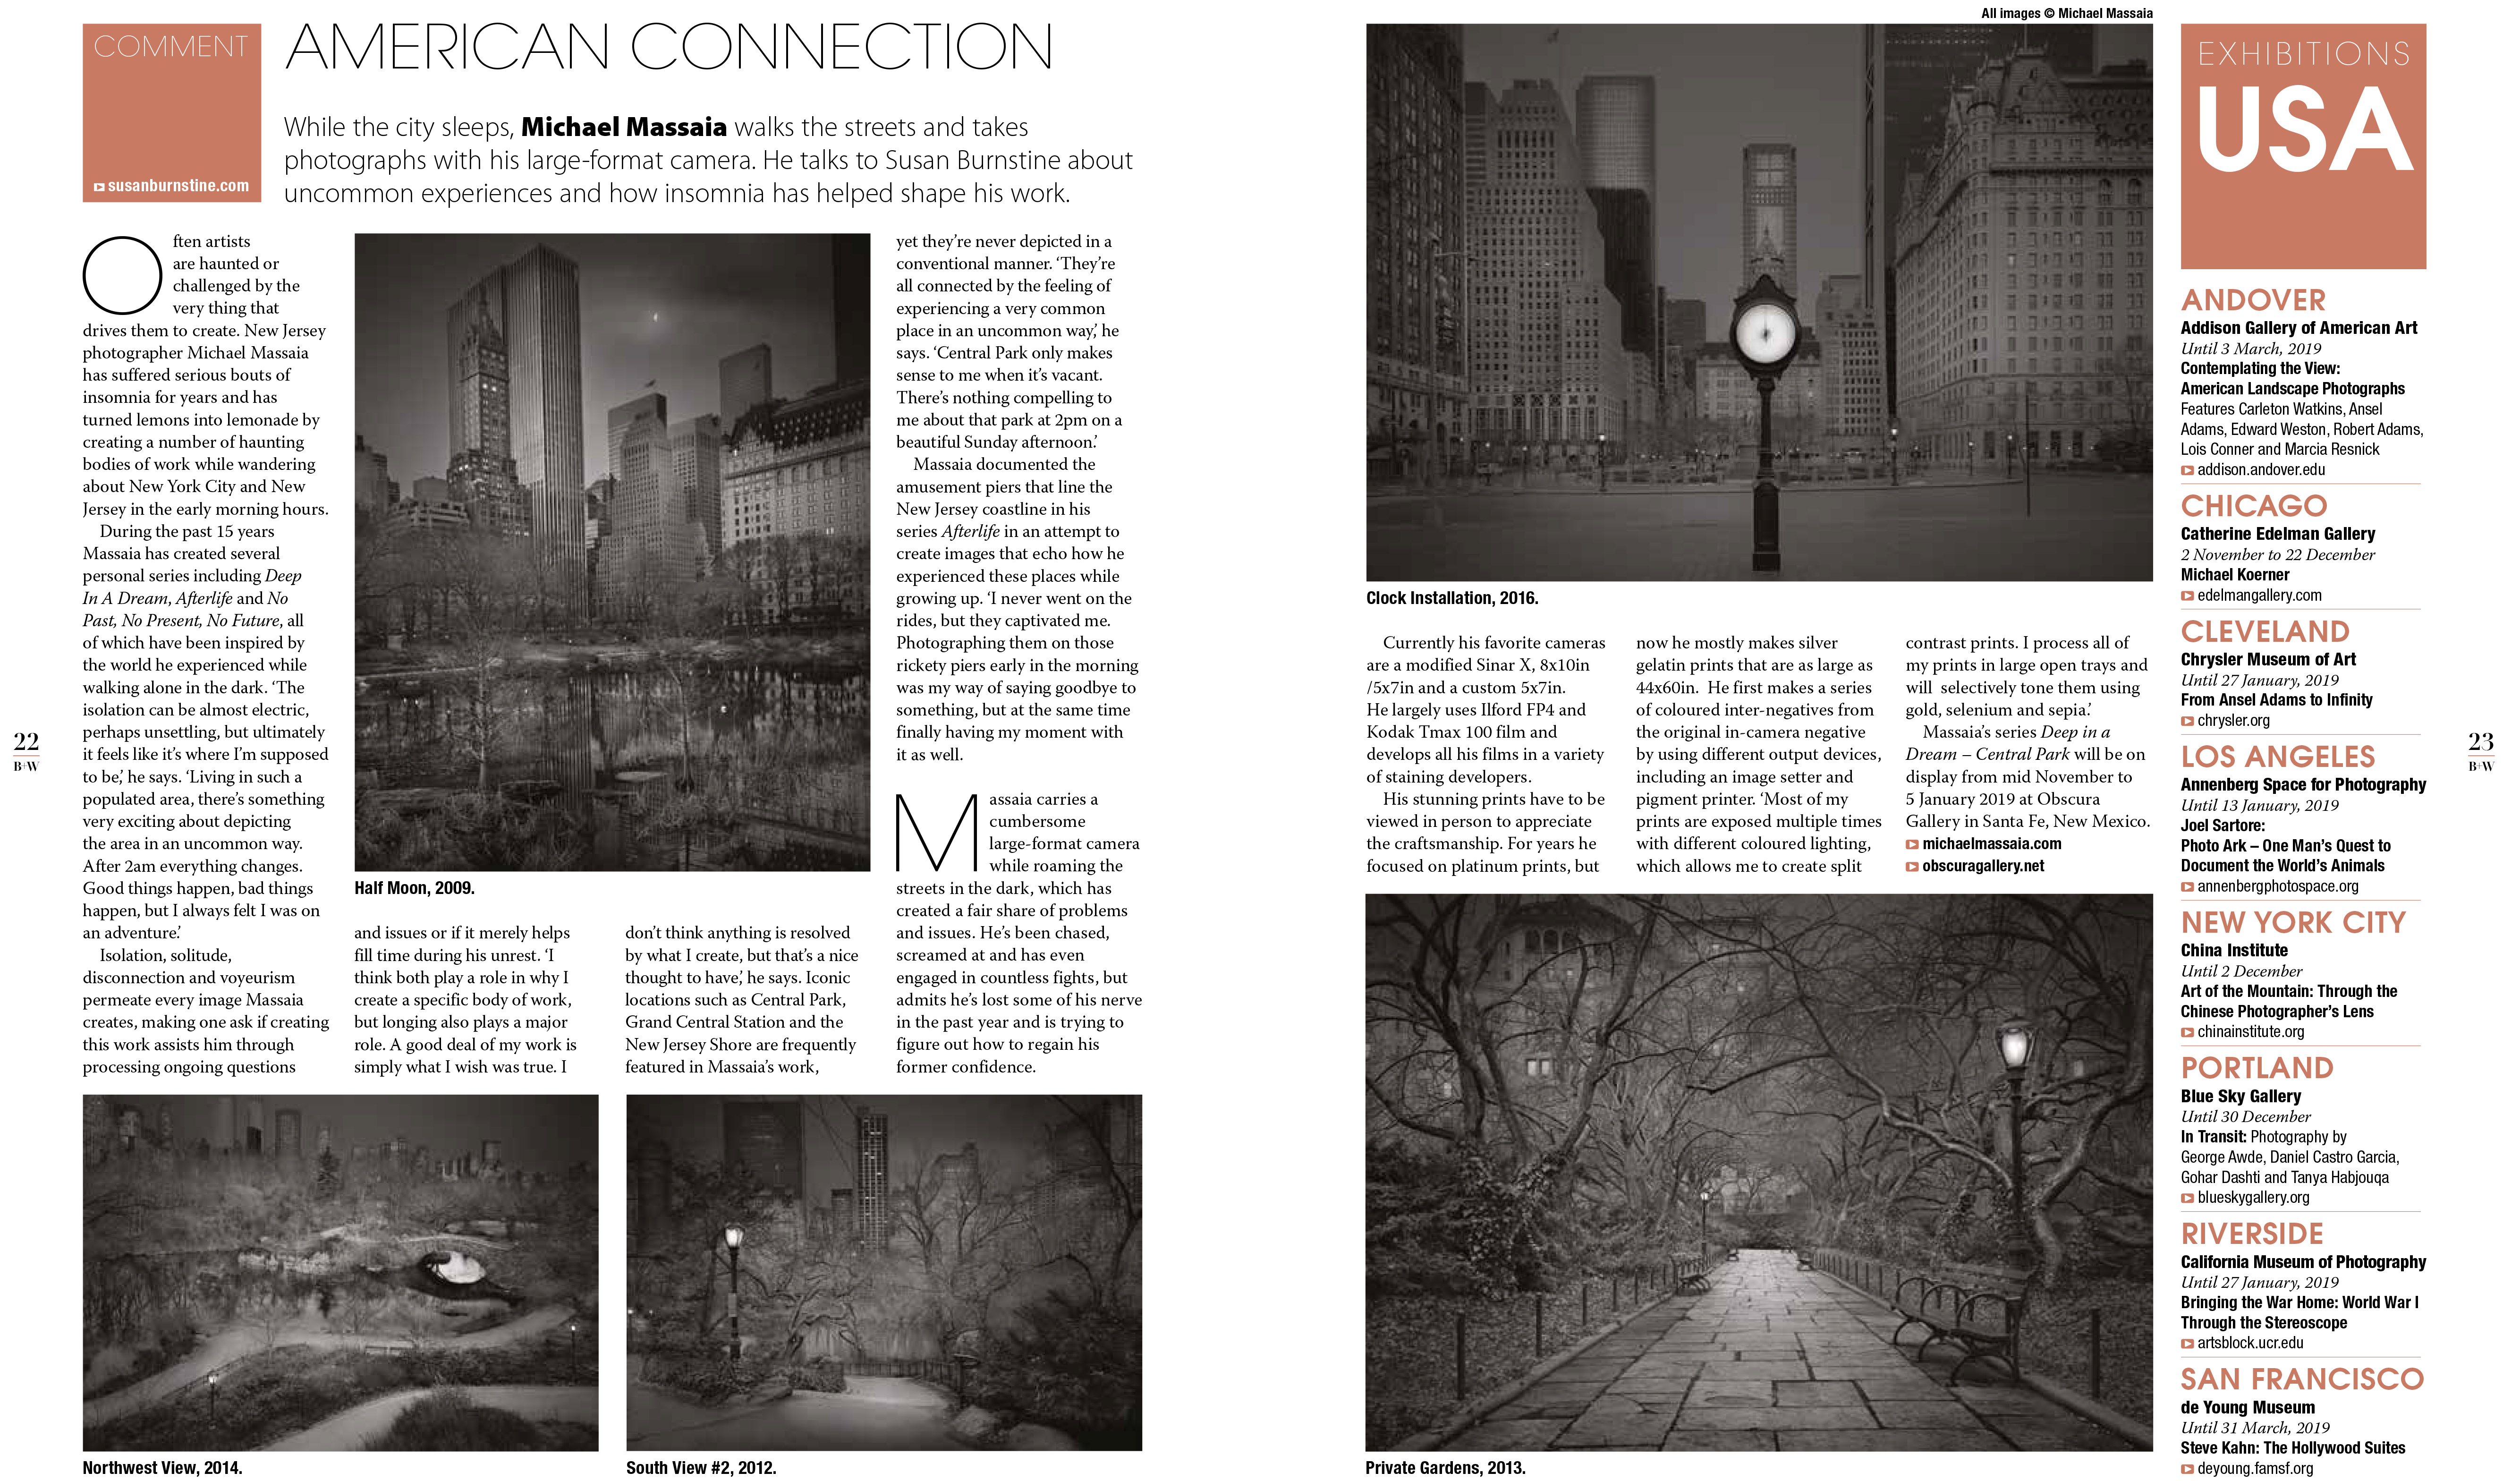 Black & White Photography Magazine (UK) Article on Michael Massaia